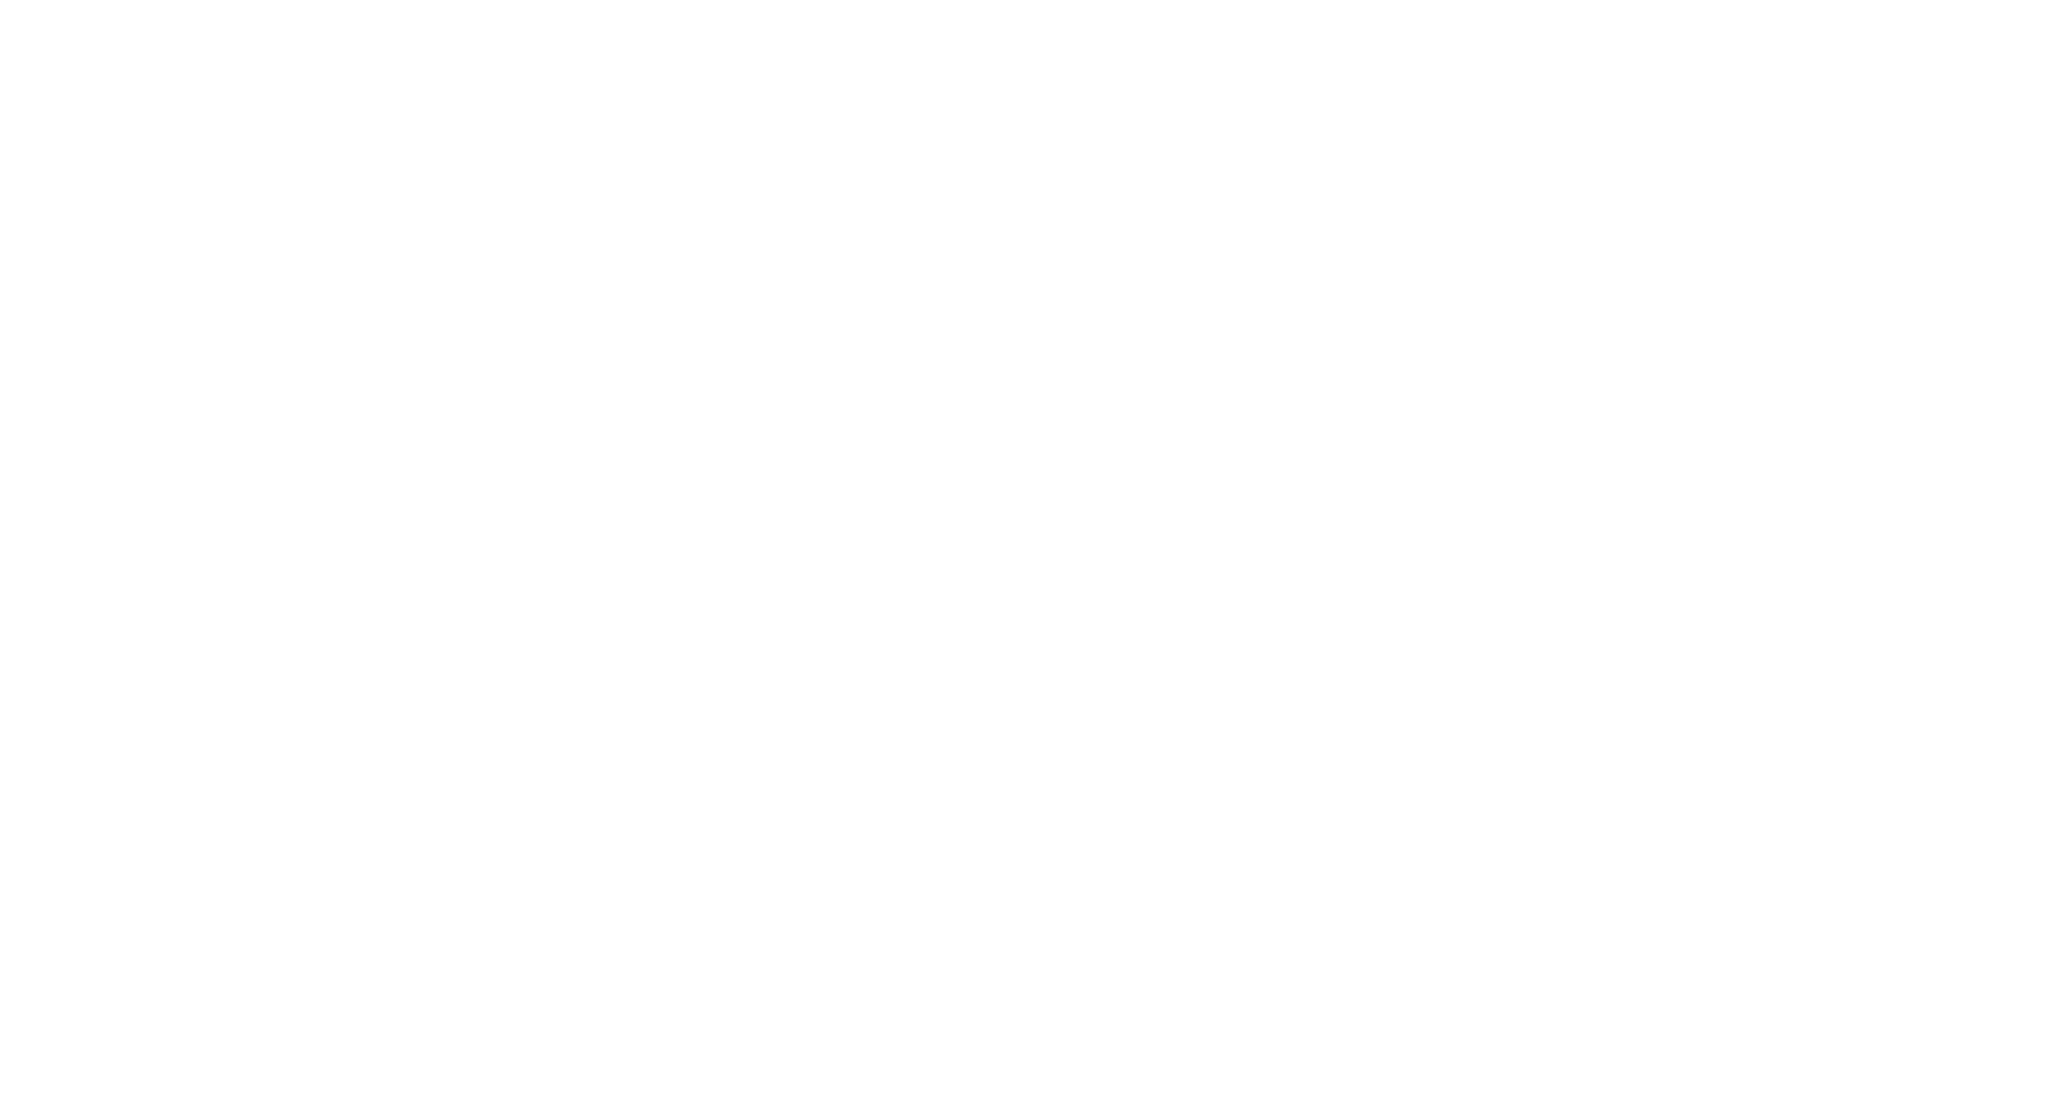 ScareCON 2023